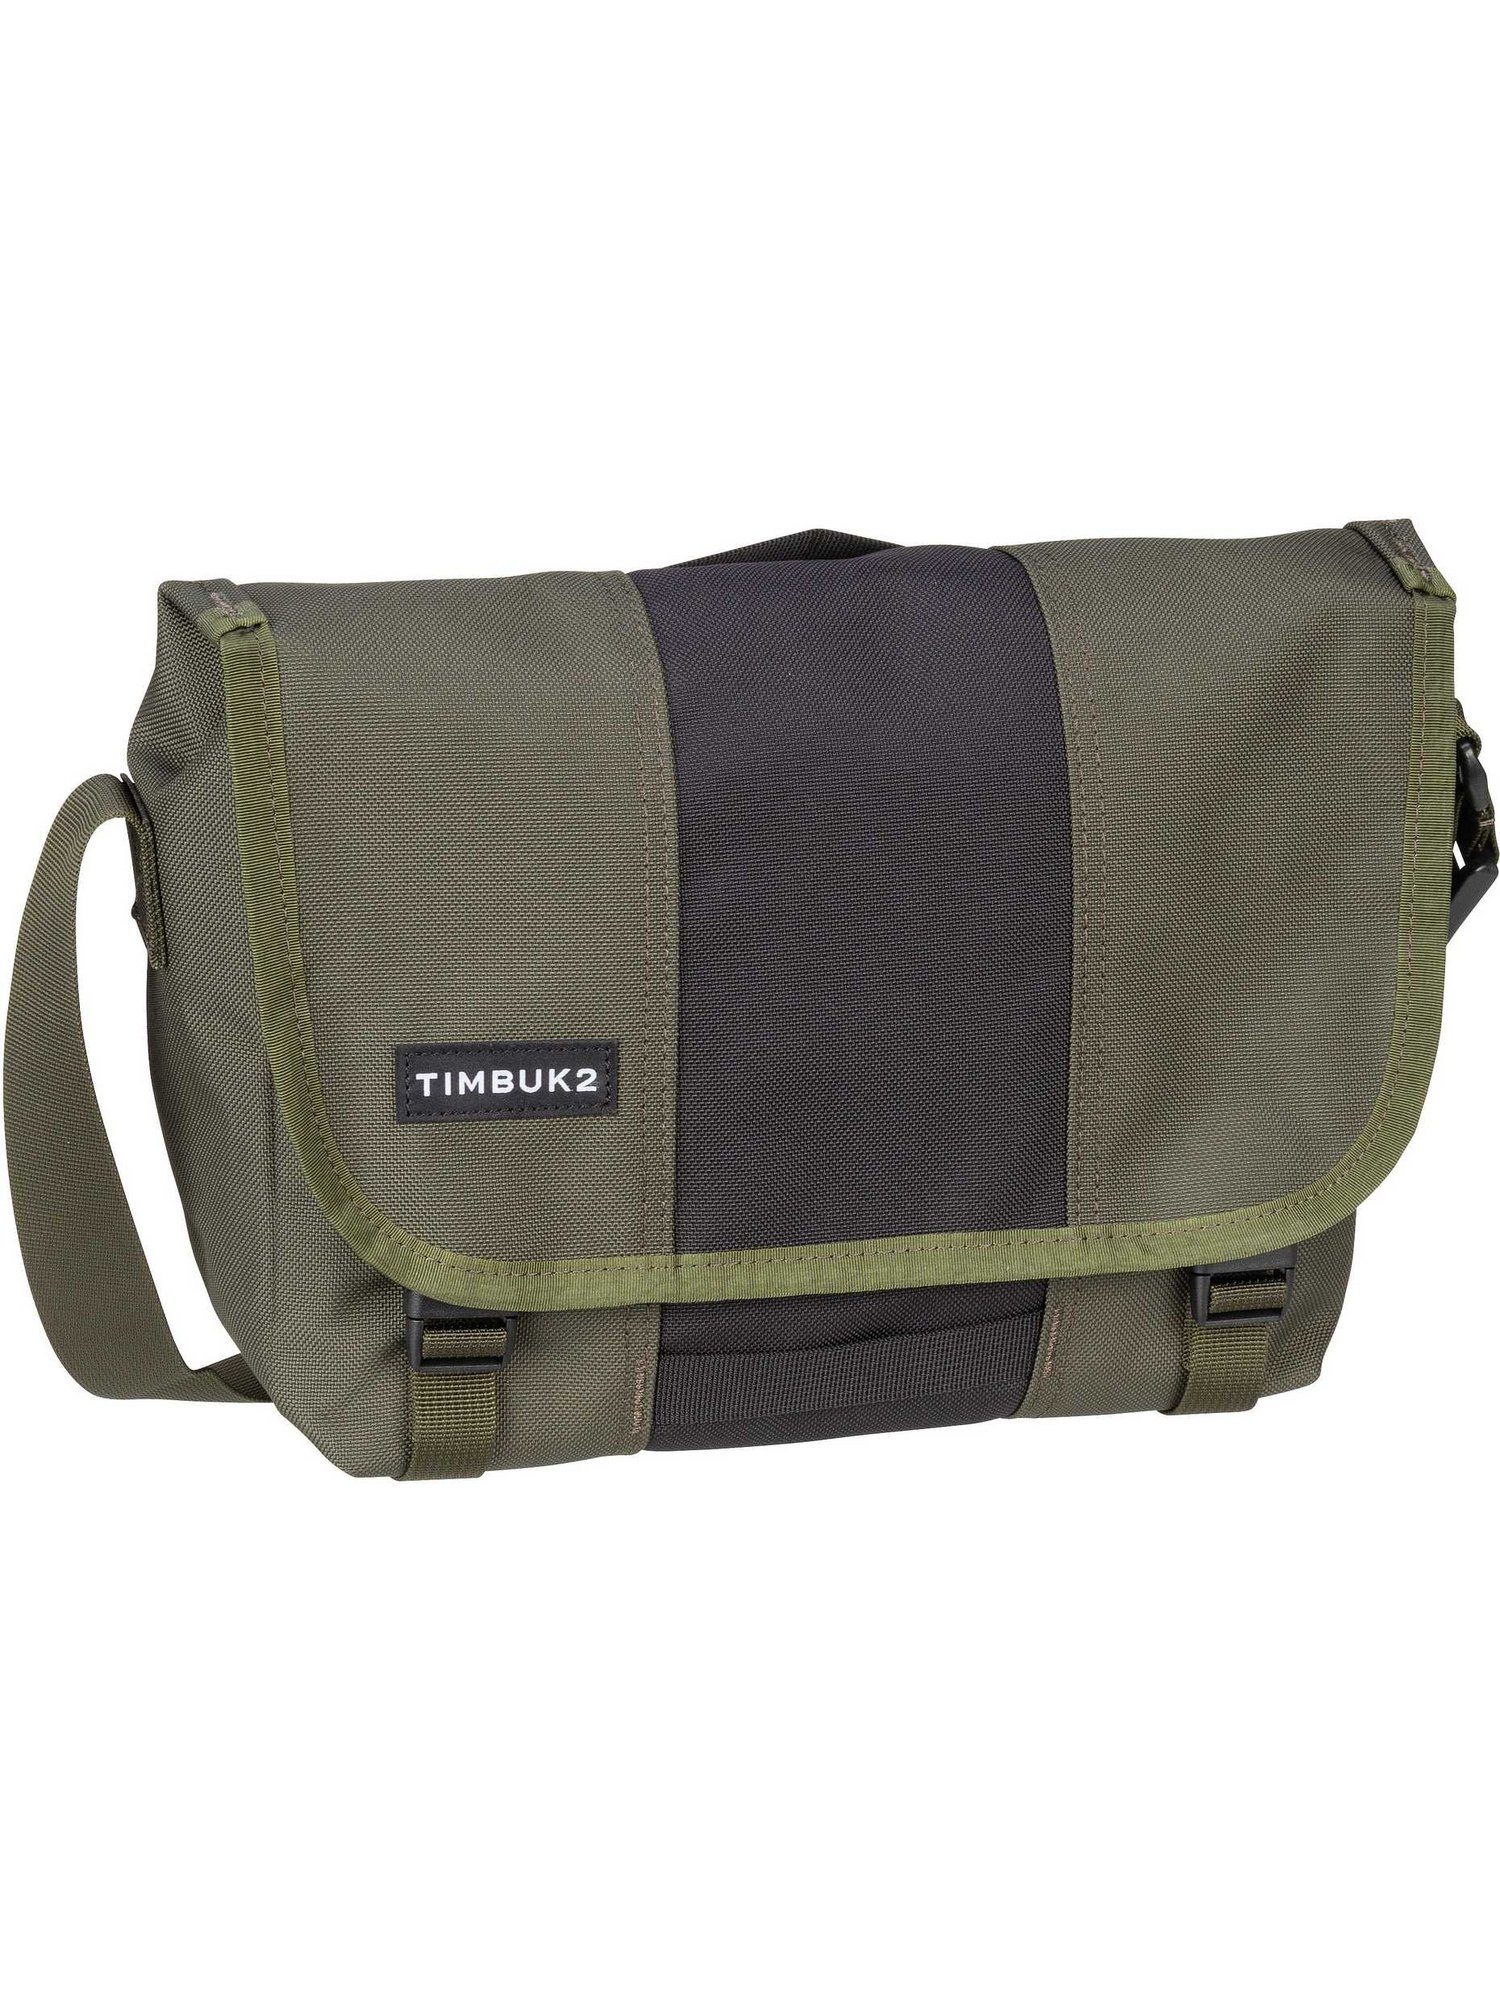 Timbuk2 Laptoptasche Classic Messenger XS, Messenger Bag Eco Uniform